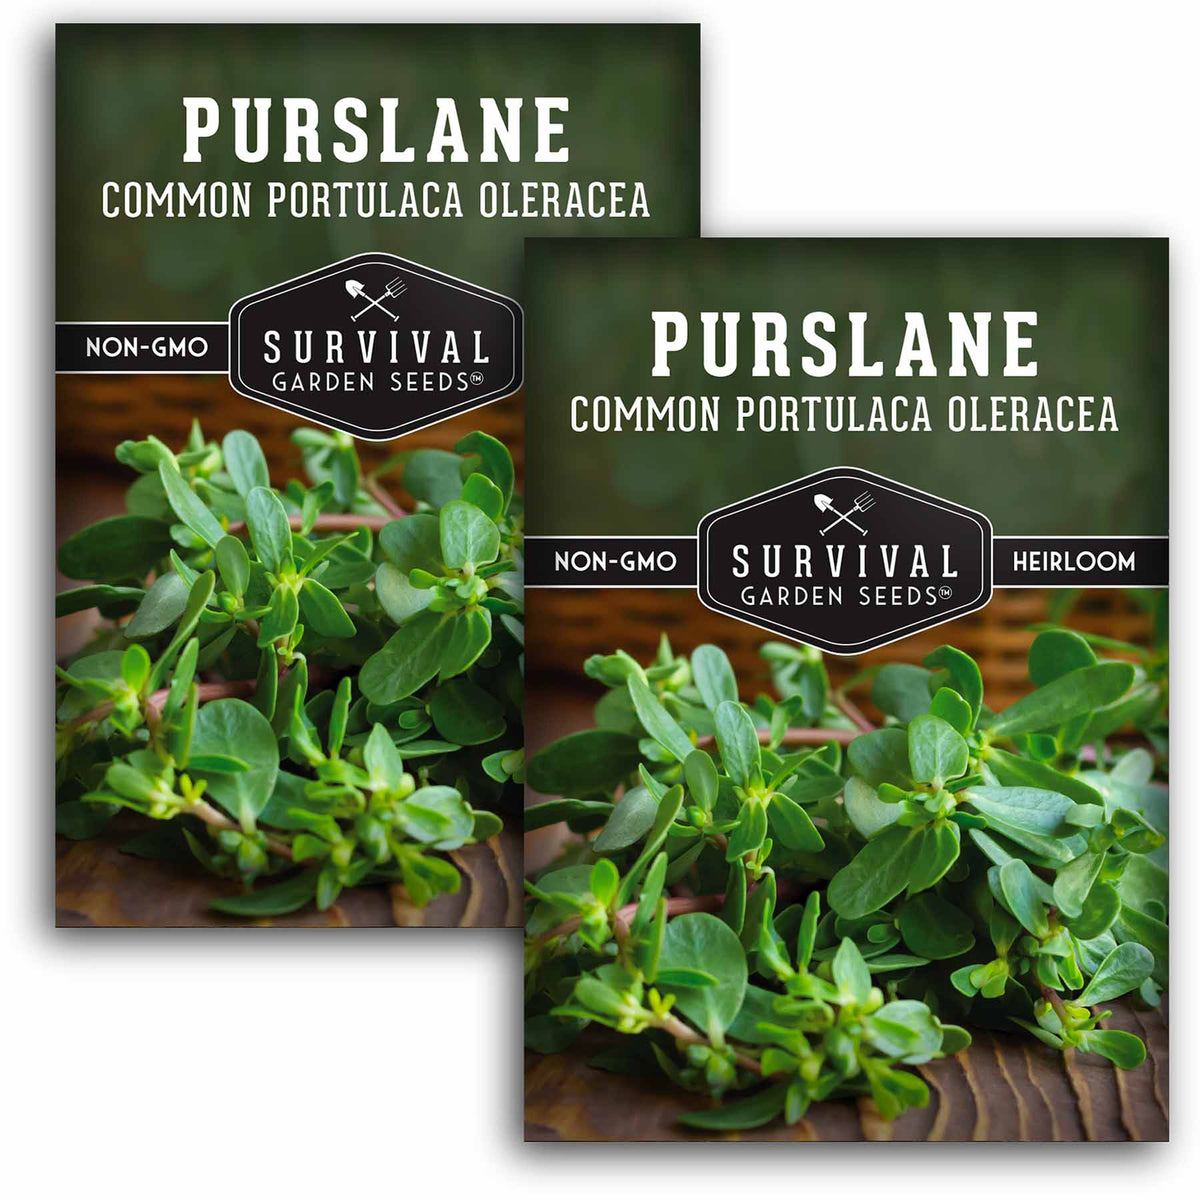 2 packets of Purslane seeds